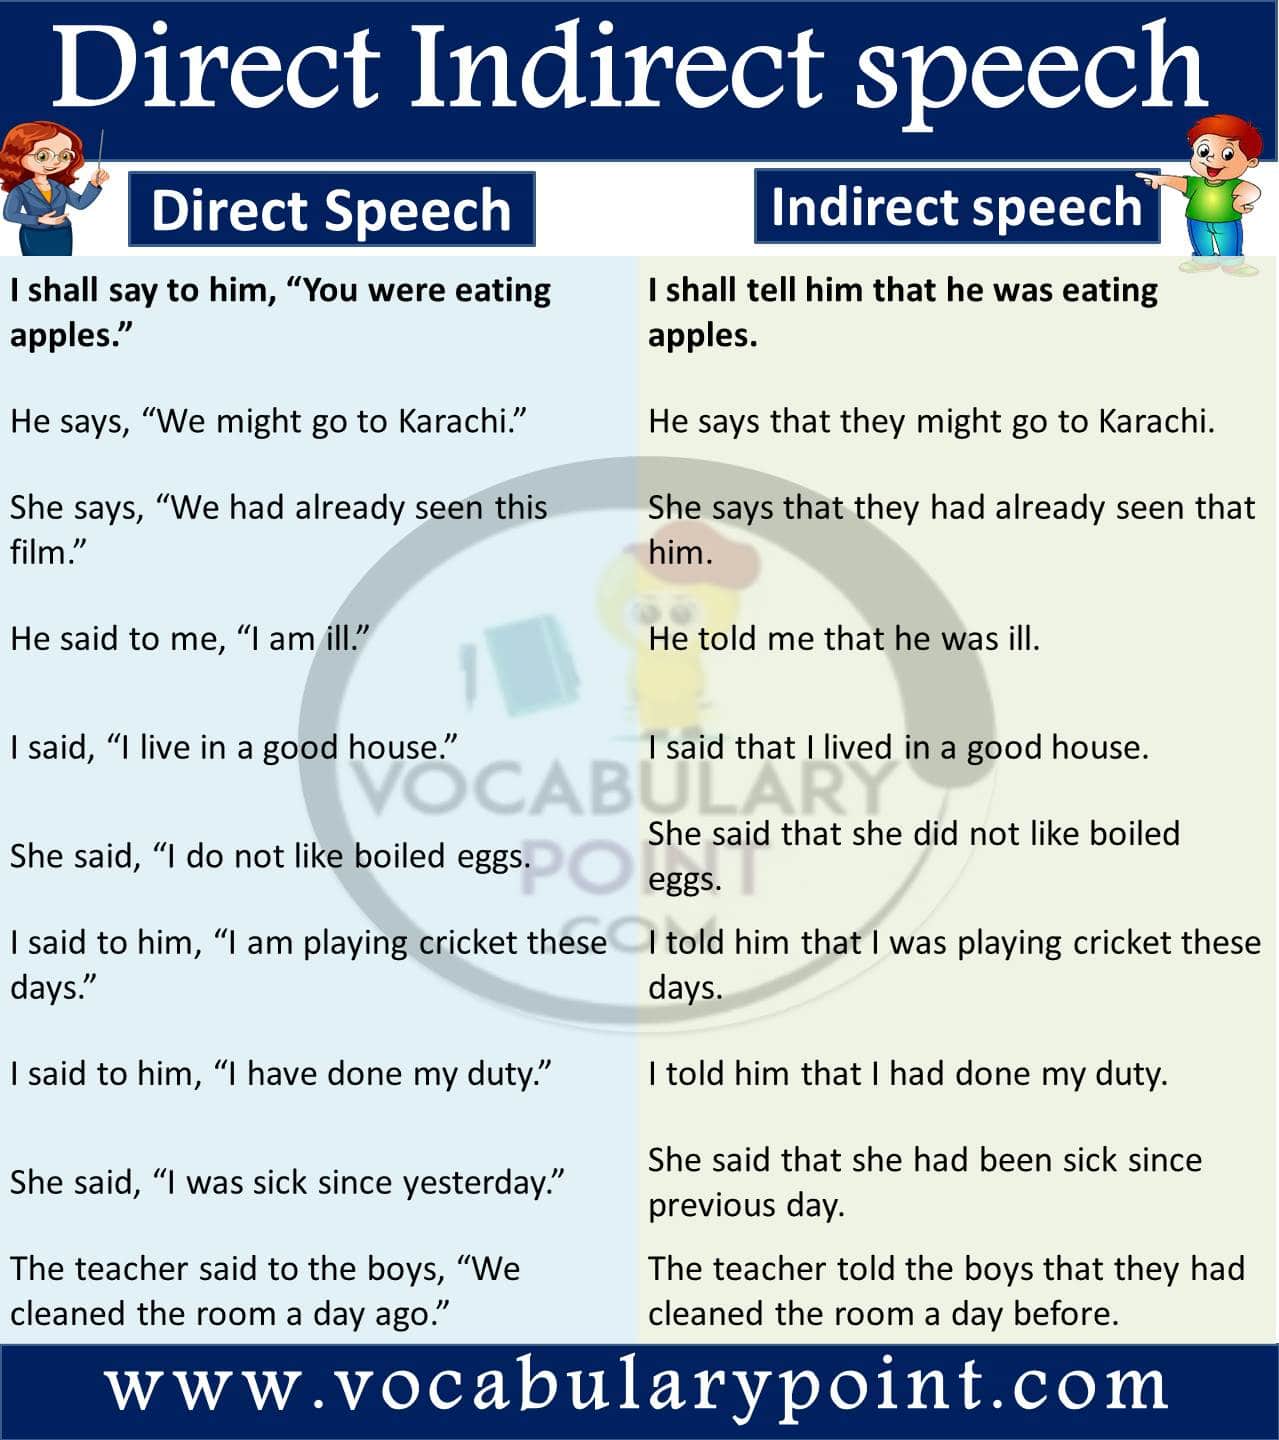 Direct indirect speech rules pdf